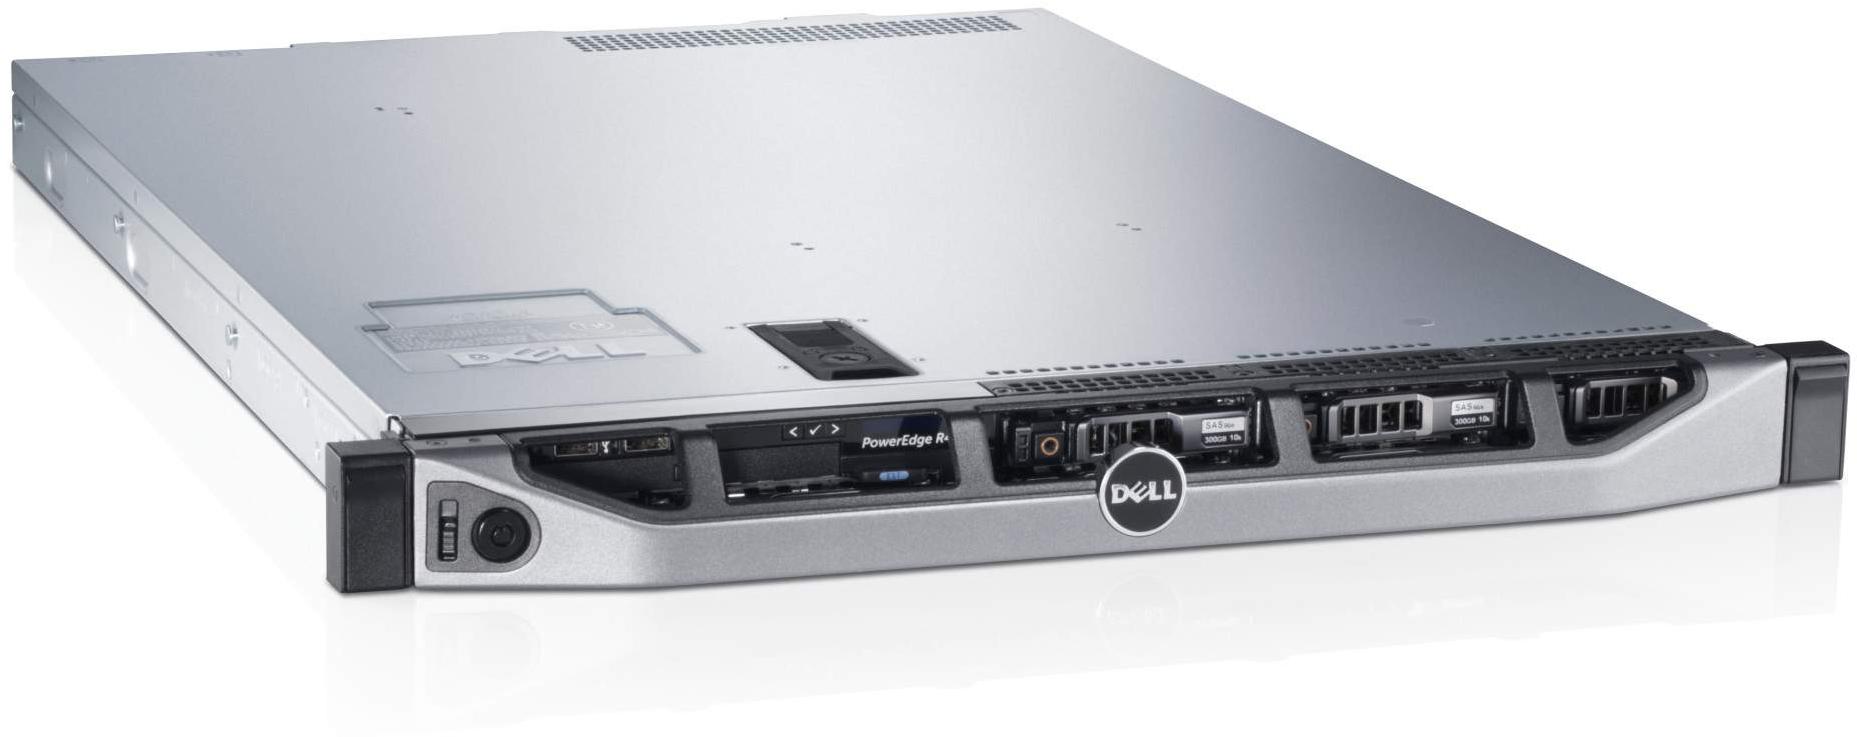     Dell PowerEdge R620 (210-ABMW/009)  2